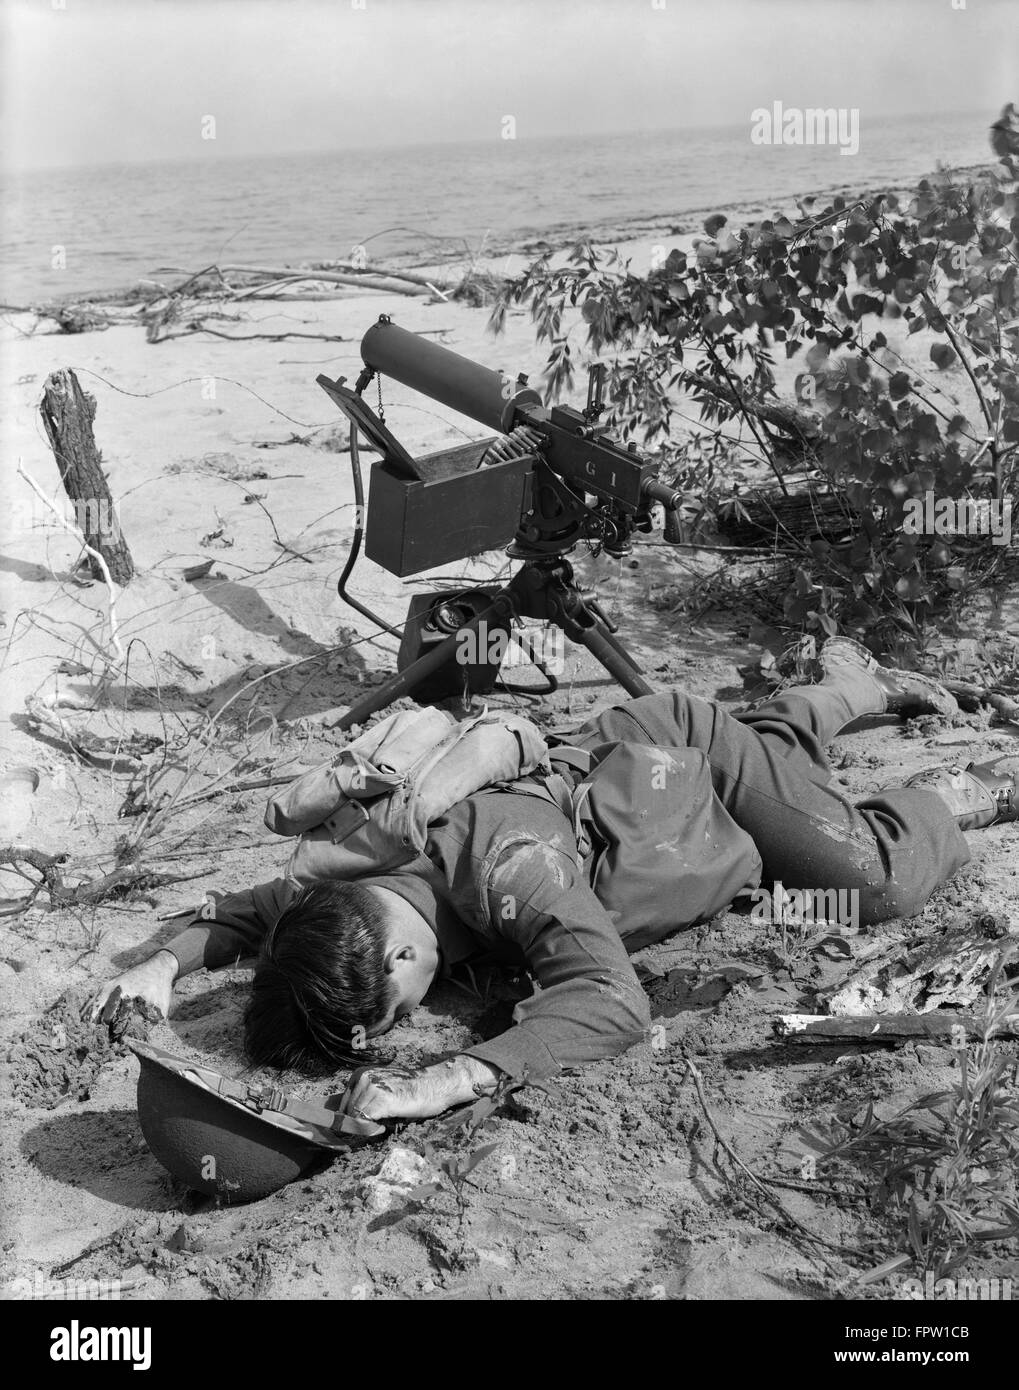 1940s WORLD WAR II INJURED DEAD SOLDIER LYING FACE DOWN ON OCEAN BEACH NEXT TO MACHINE GUN Stock Photo